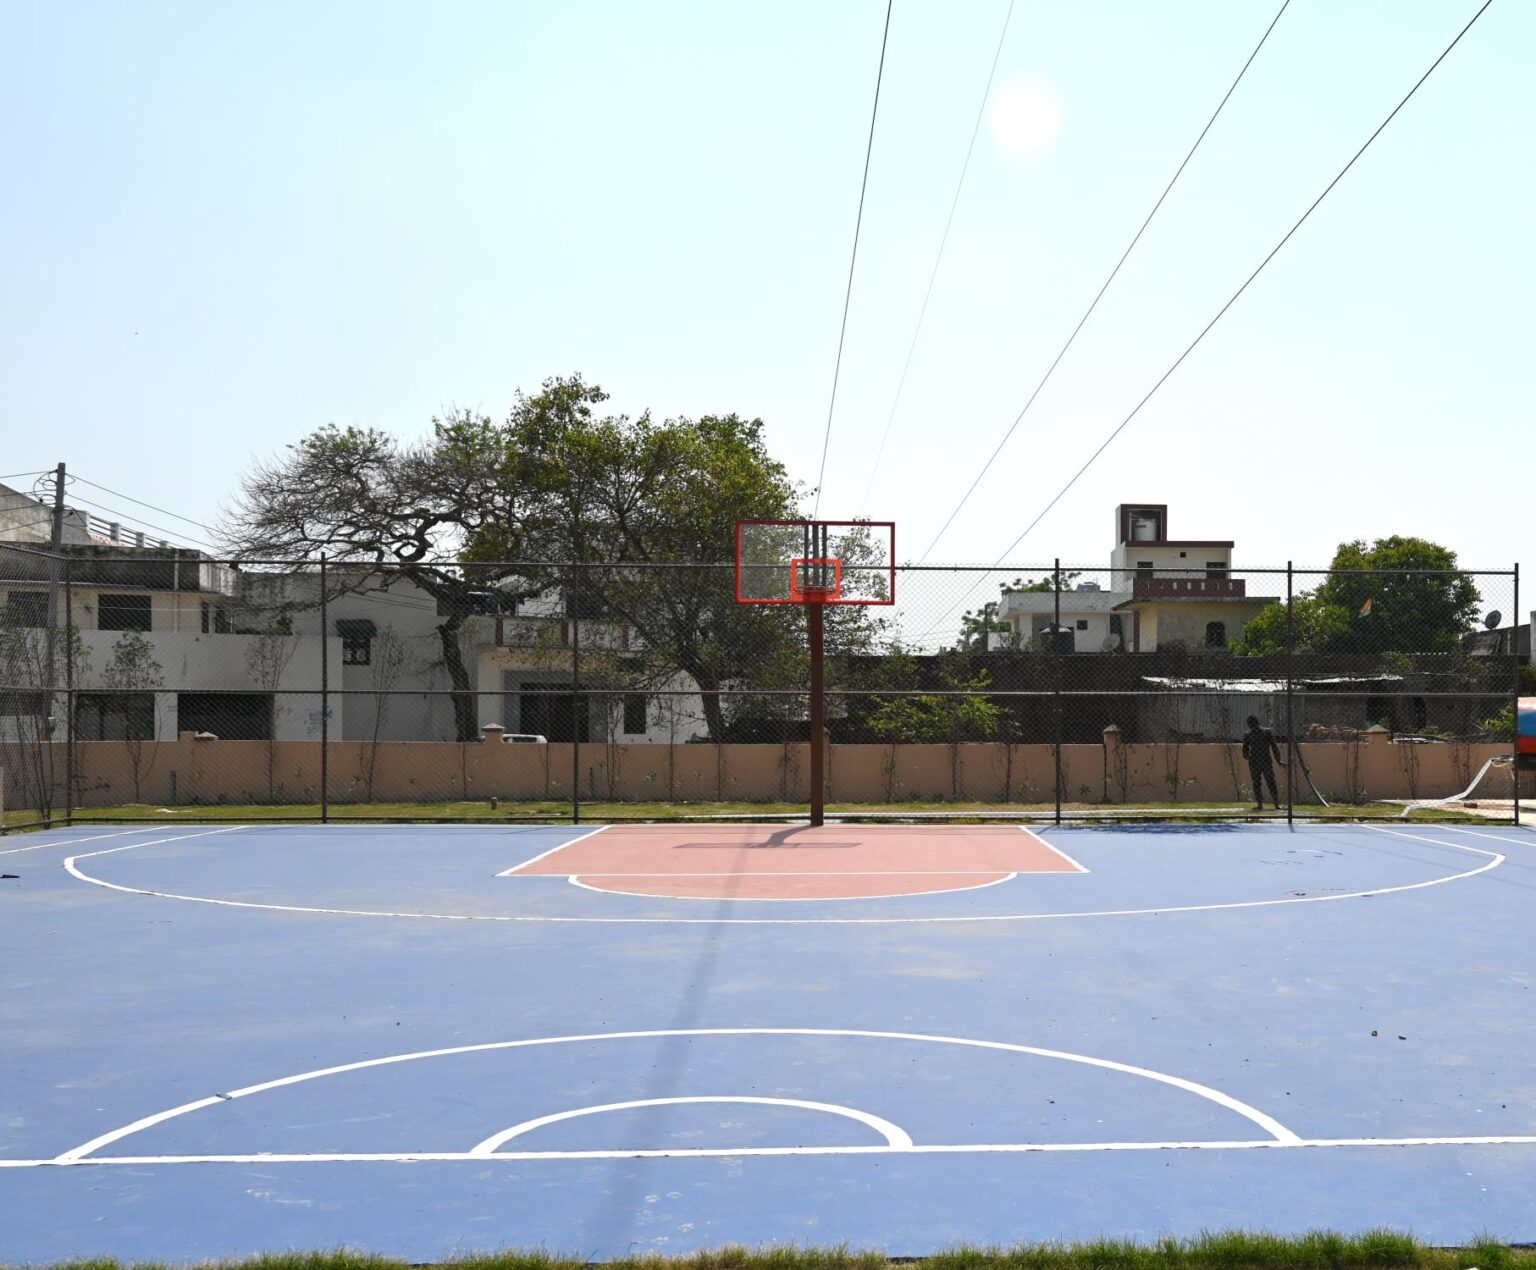 Emperium city, park basketball ground